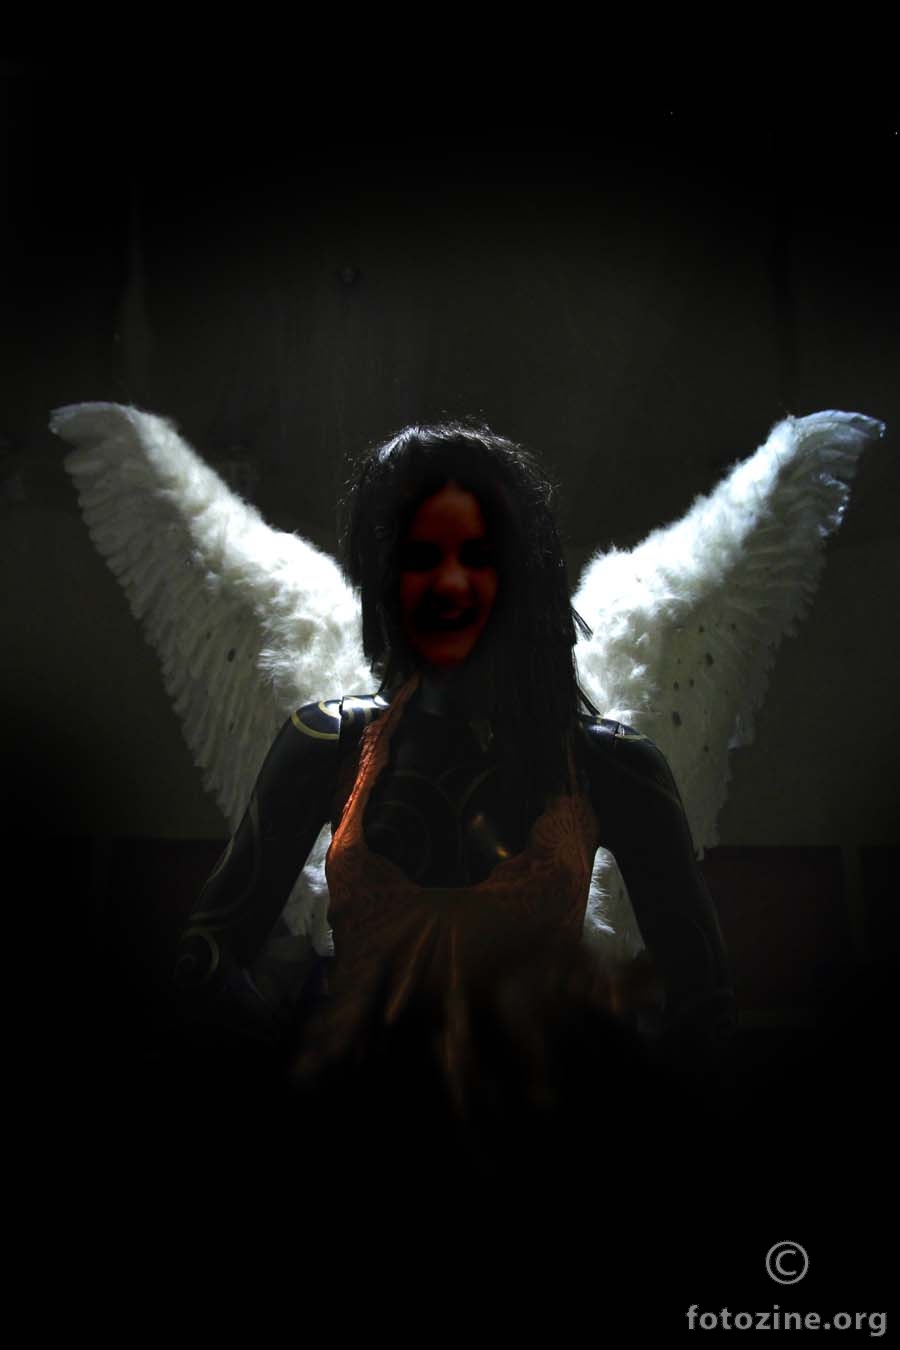 The dark angel